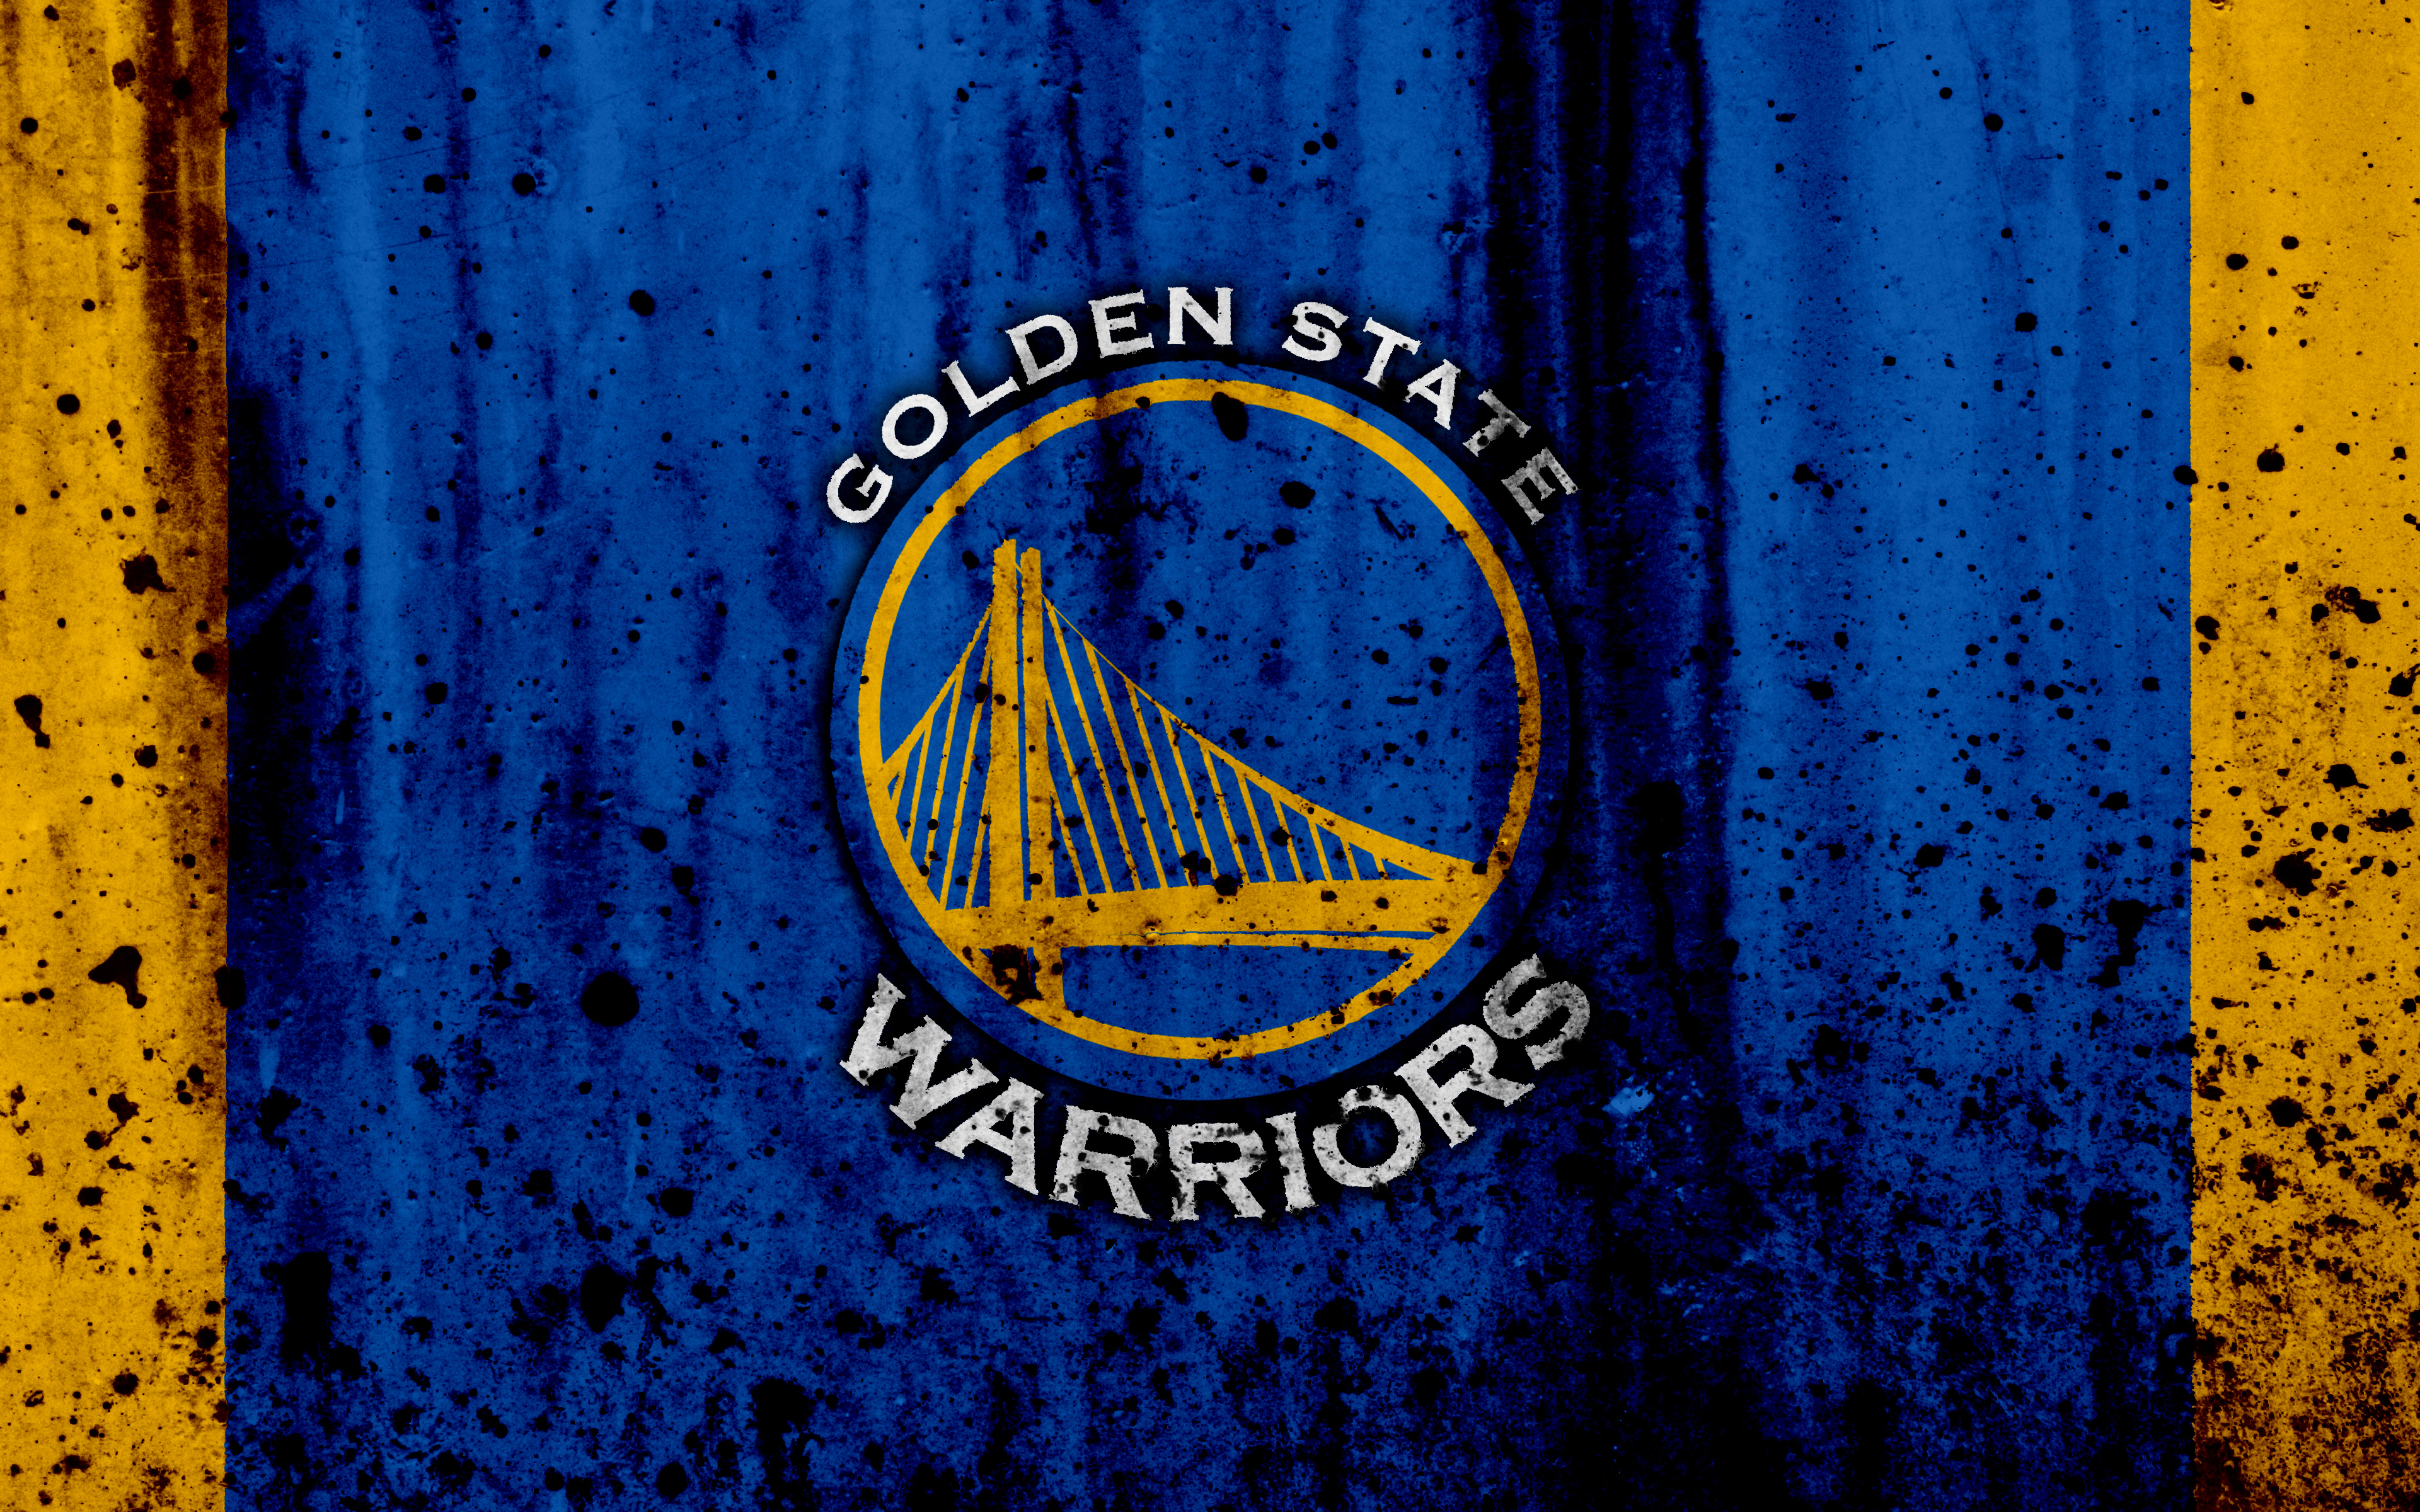 warriors old logo colors  Golden state warriors logo, Warrior